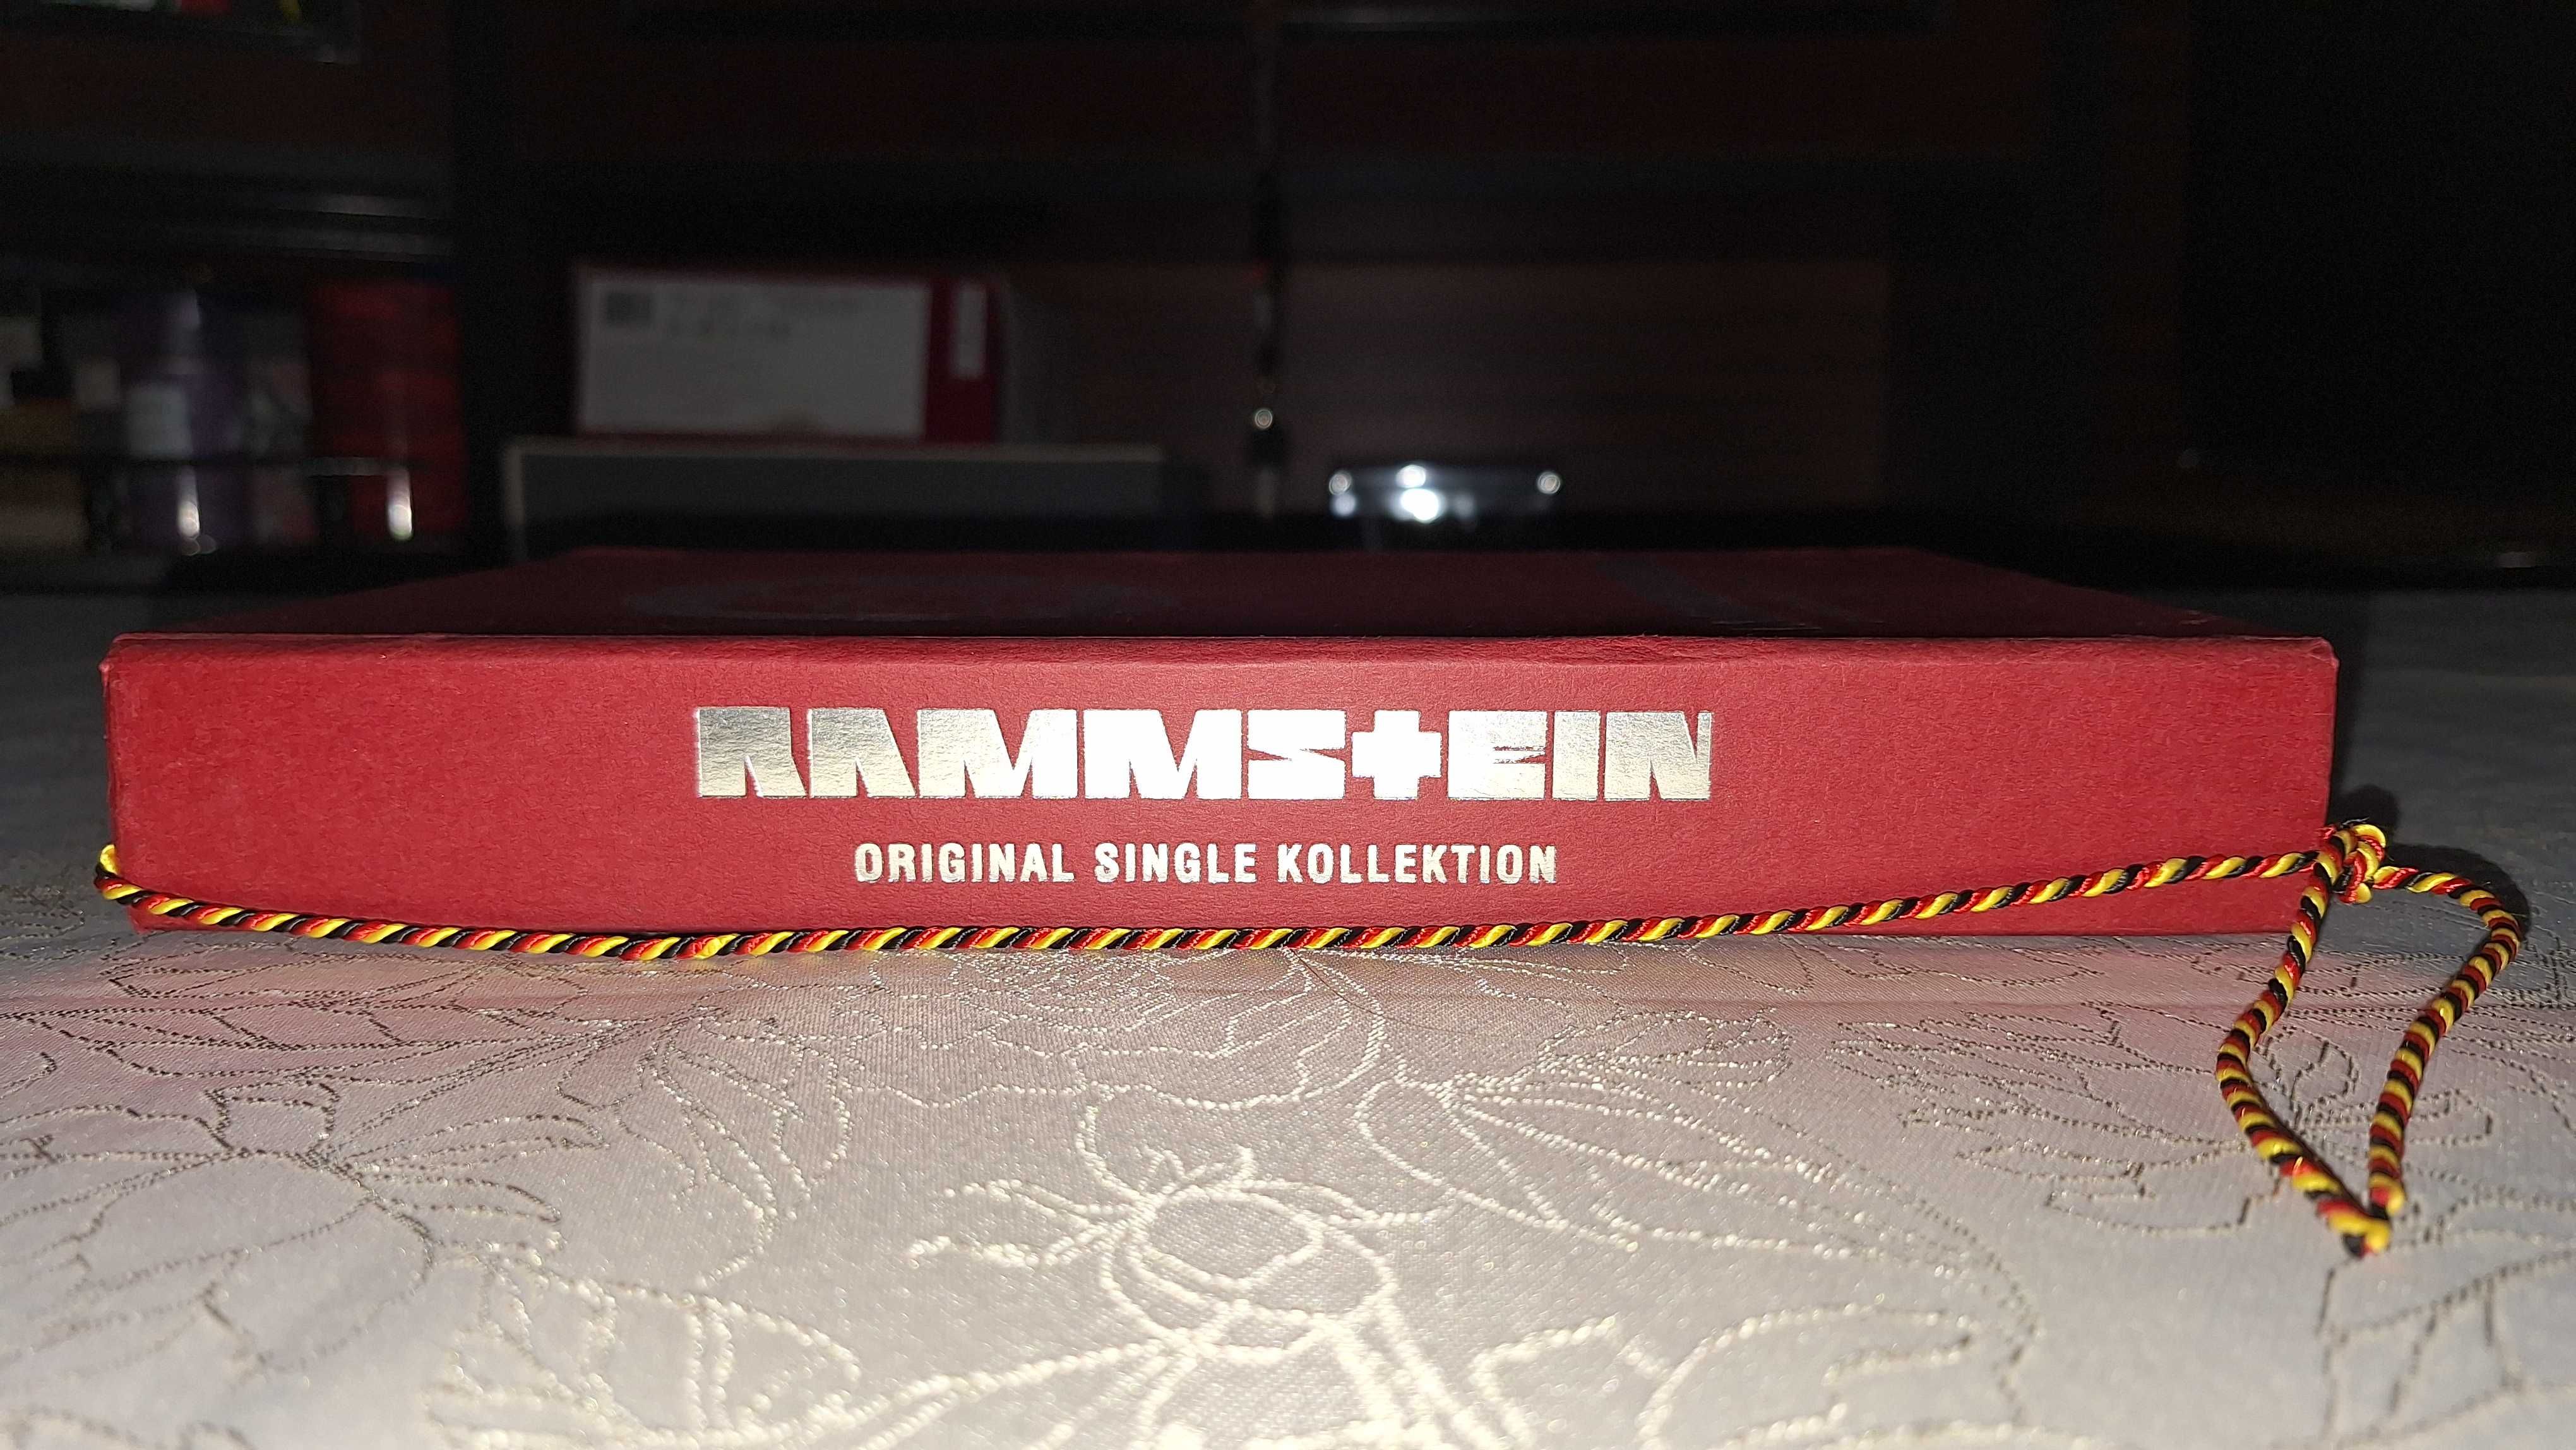 Płyty CD Rammstein Original Single Kollektion